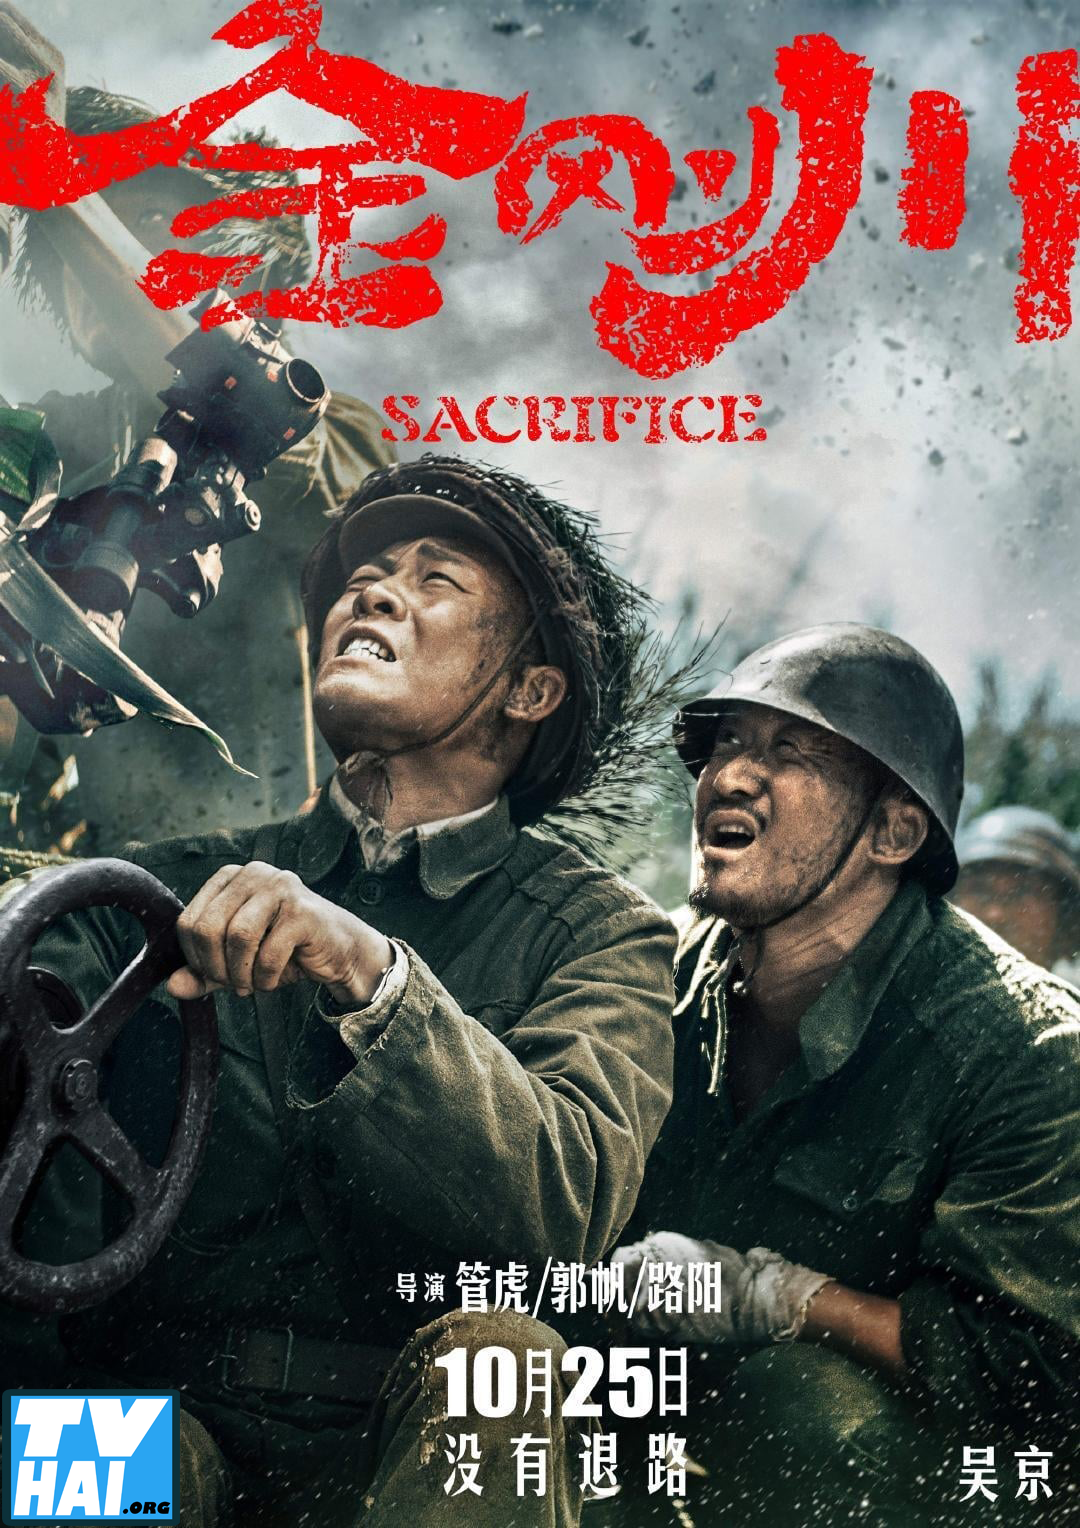 Banner Phim Hiến Dâng (The Sacrifice)